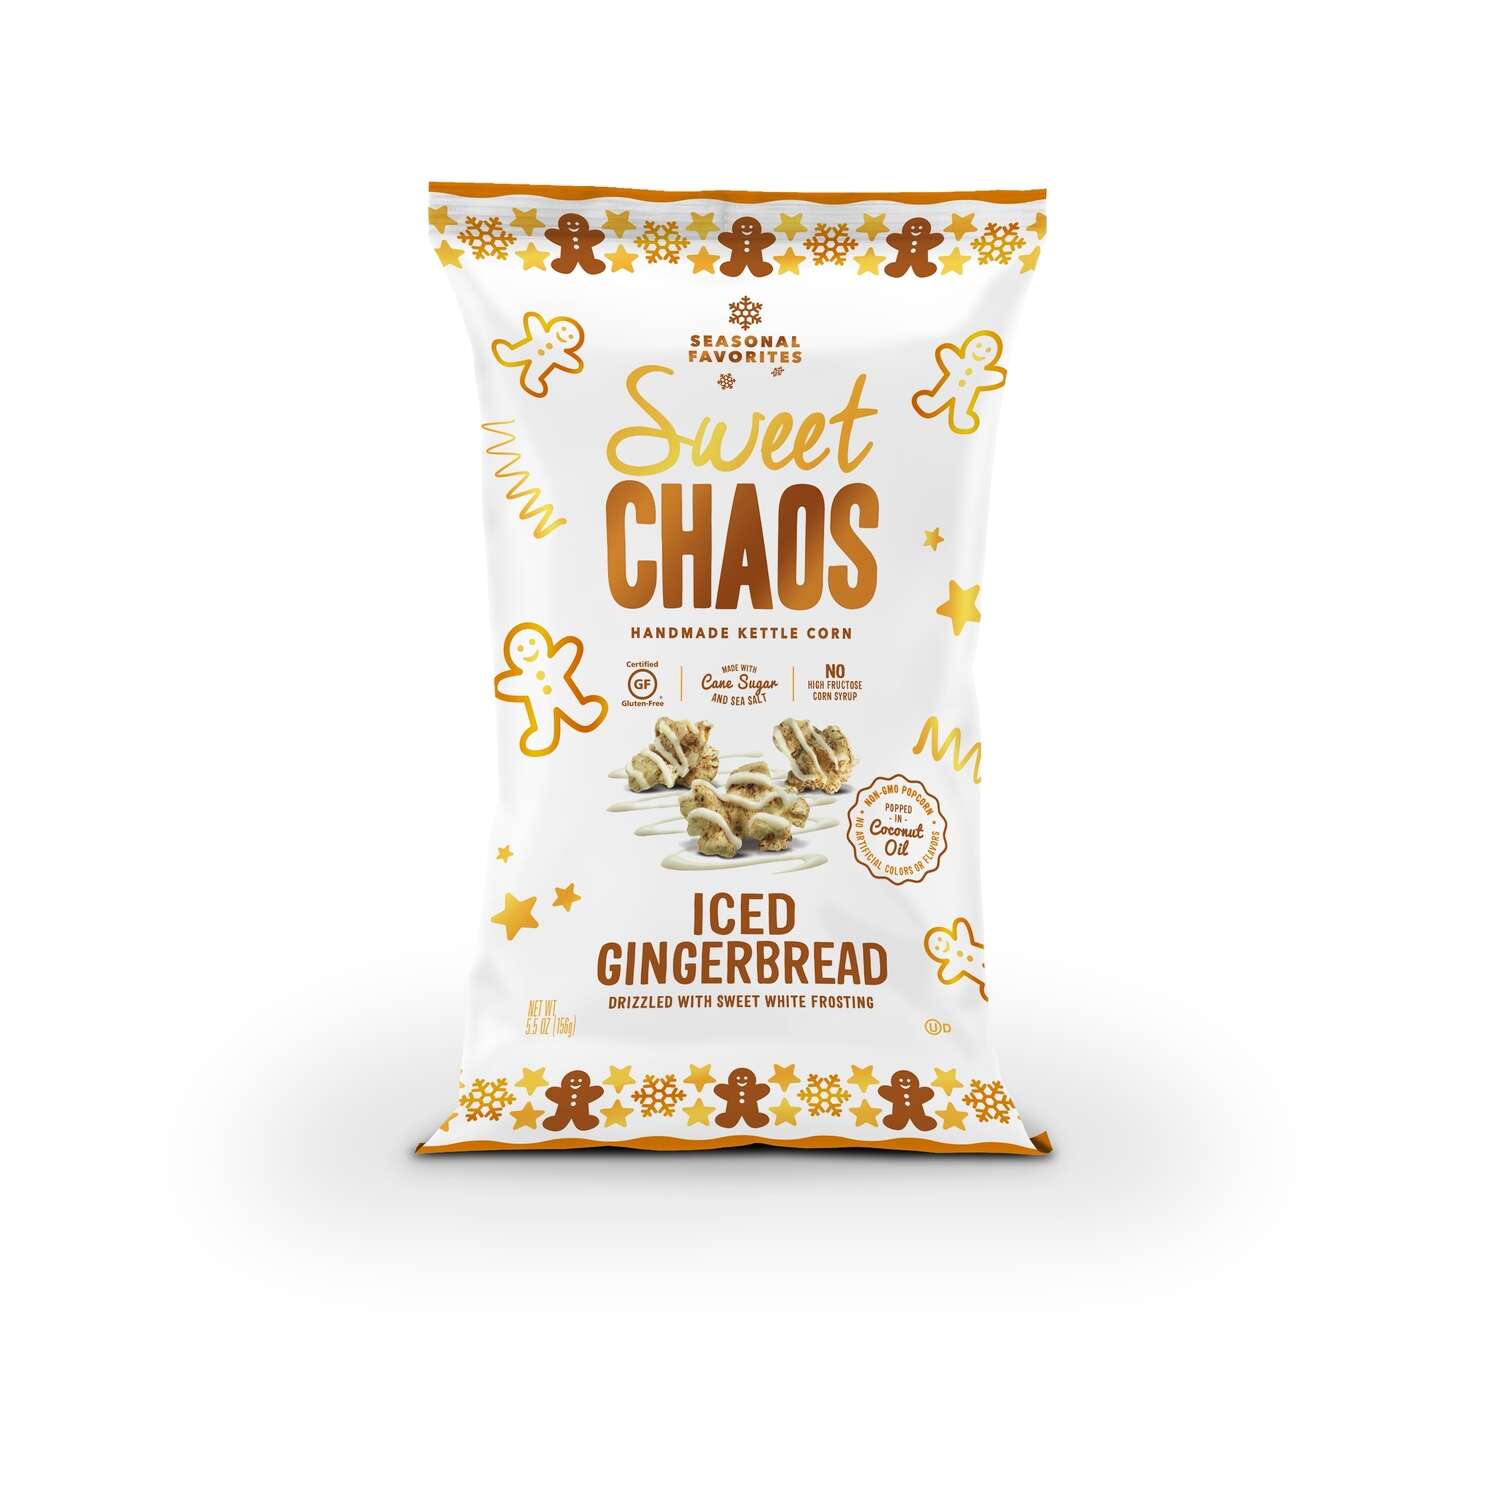 Sweet Chaos Handmade Kettle Corn - 5.5 oz. Iced Gingerbread Flavor, Gourmet Popcorn